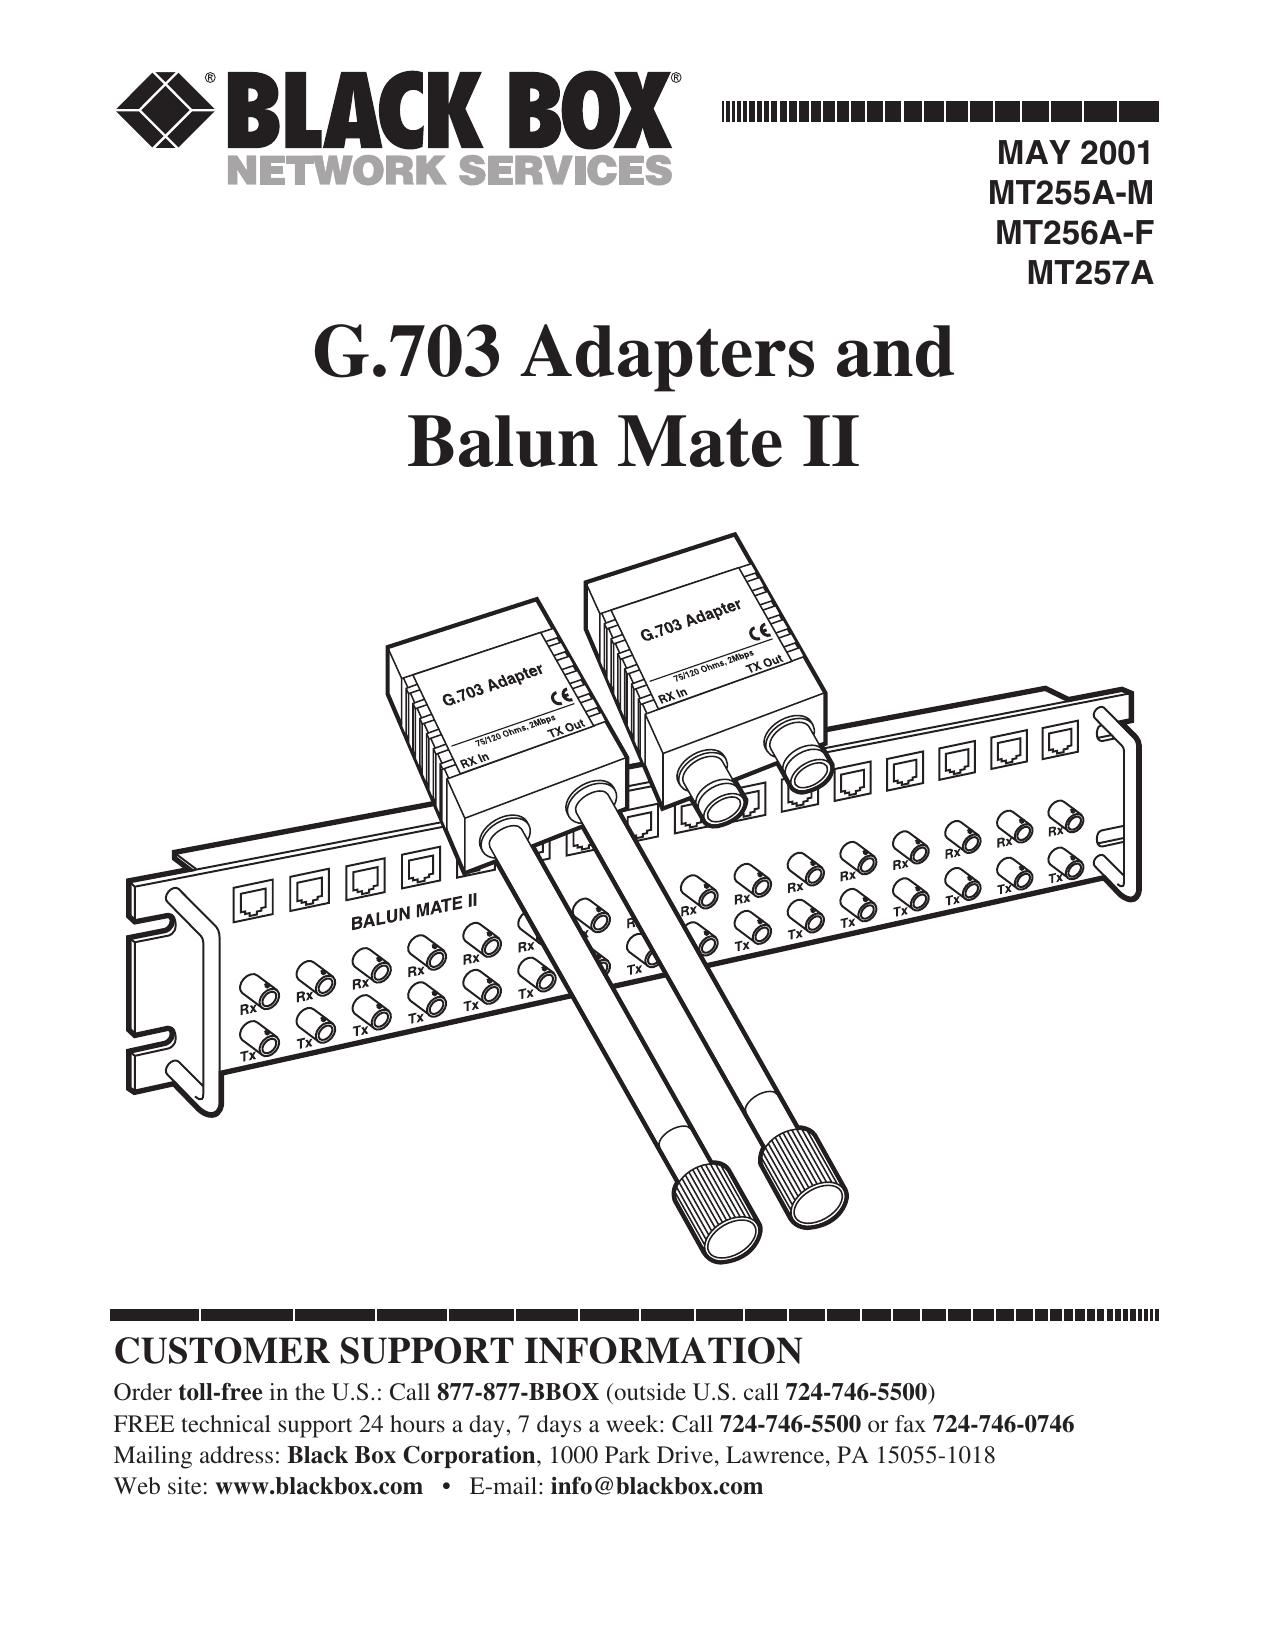 Black Box G.703 Adapters and Balun Mate II Marine RADAR User Manual